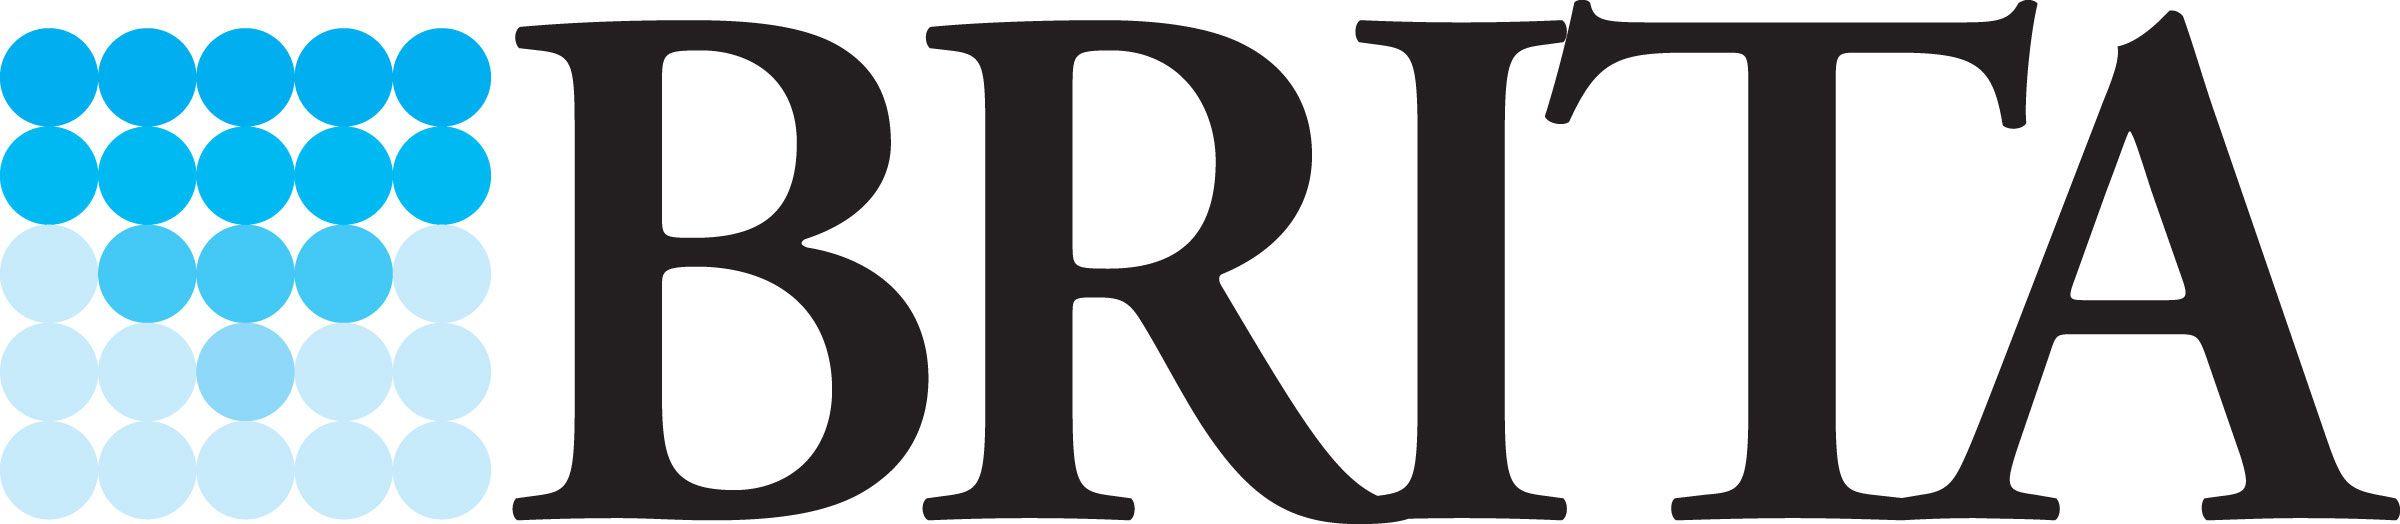 Brita Logo - Brita Logos